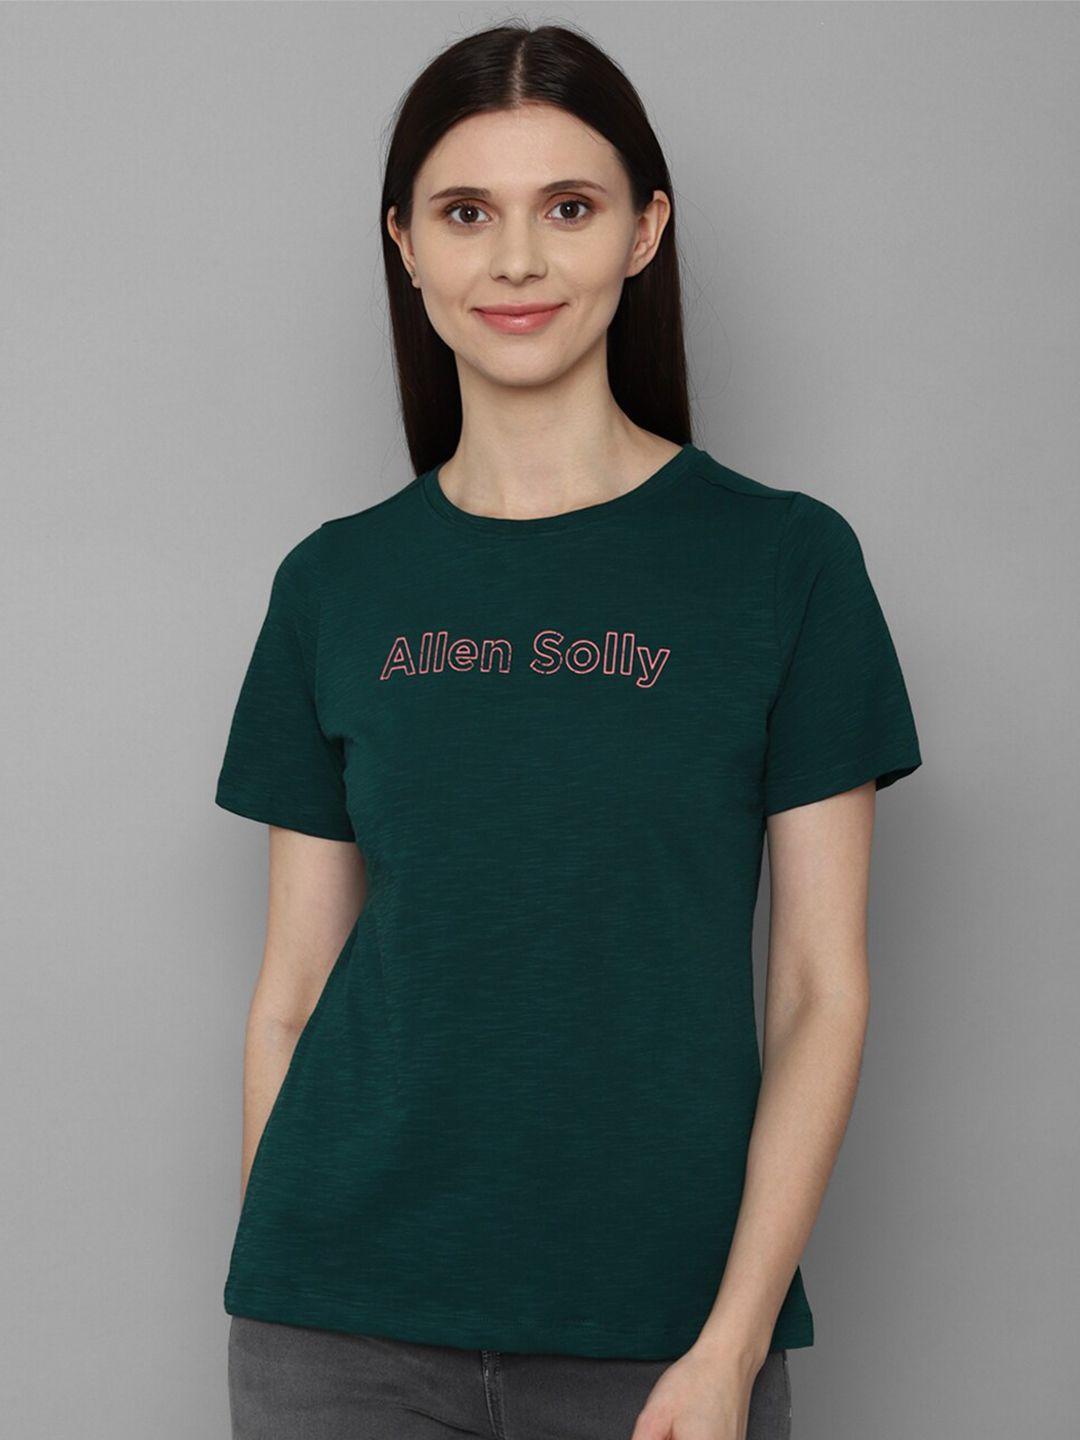 allen-solly-woman-women-green-typography-t-shirt